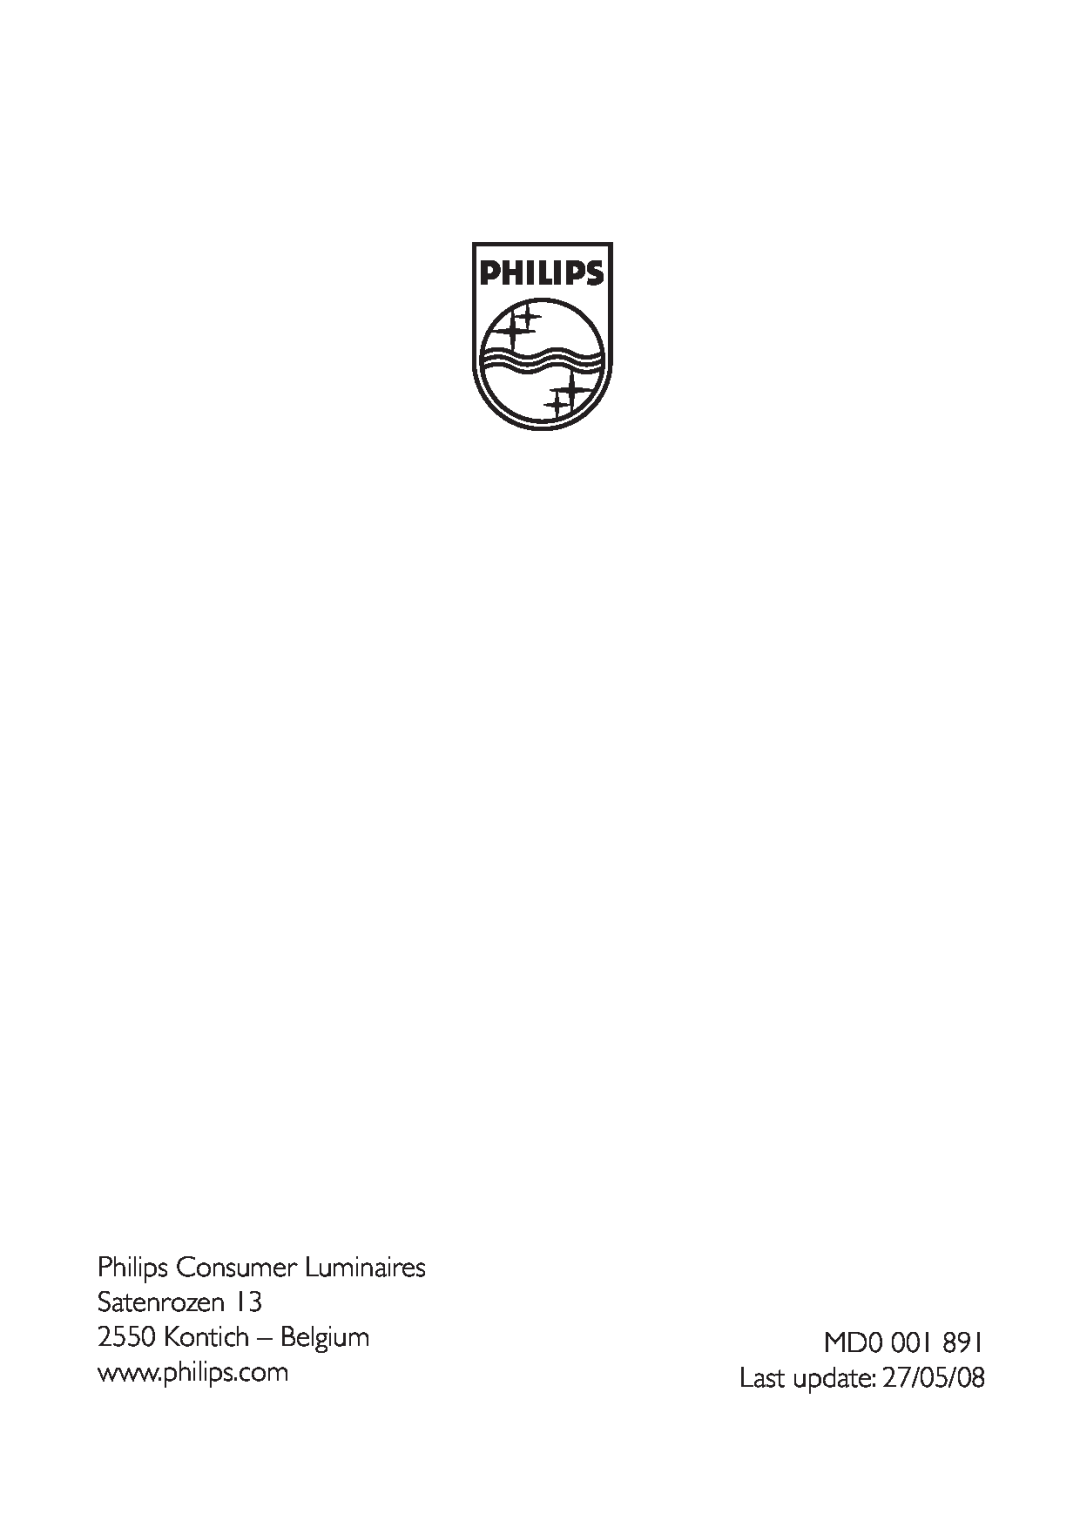 Philips 37344/48/16 user manual Philips Consumer Luminaires, Satenrozen, Kontich – Belgium, MD0 